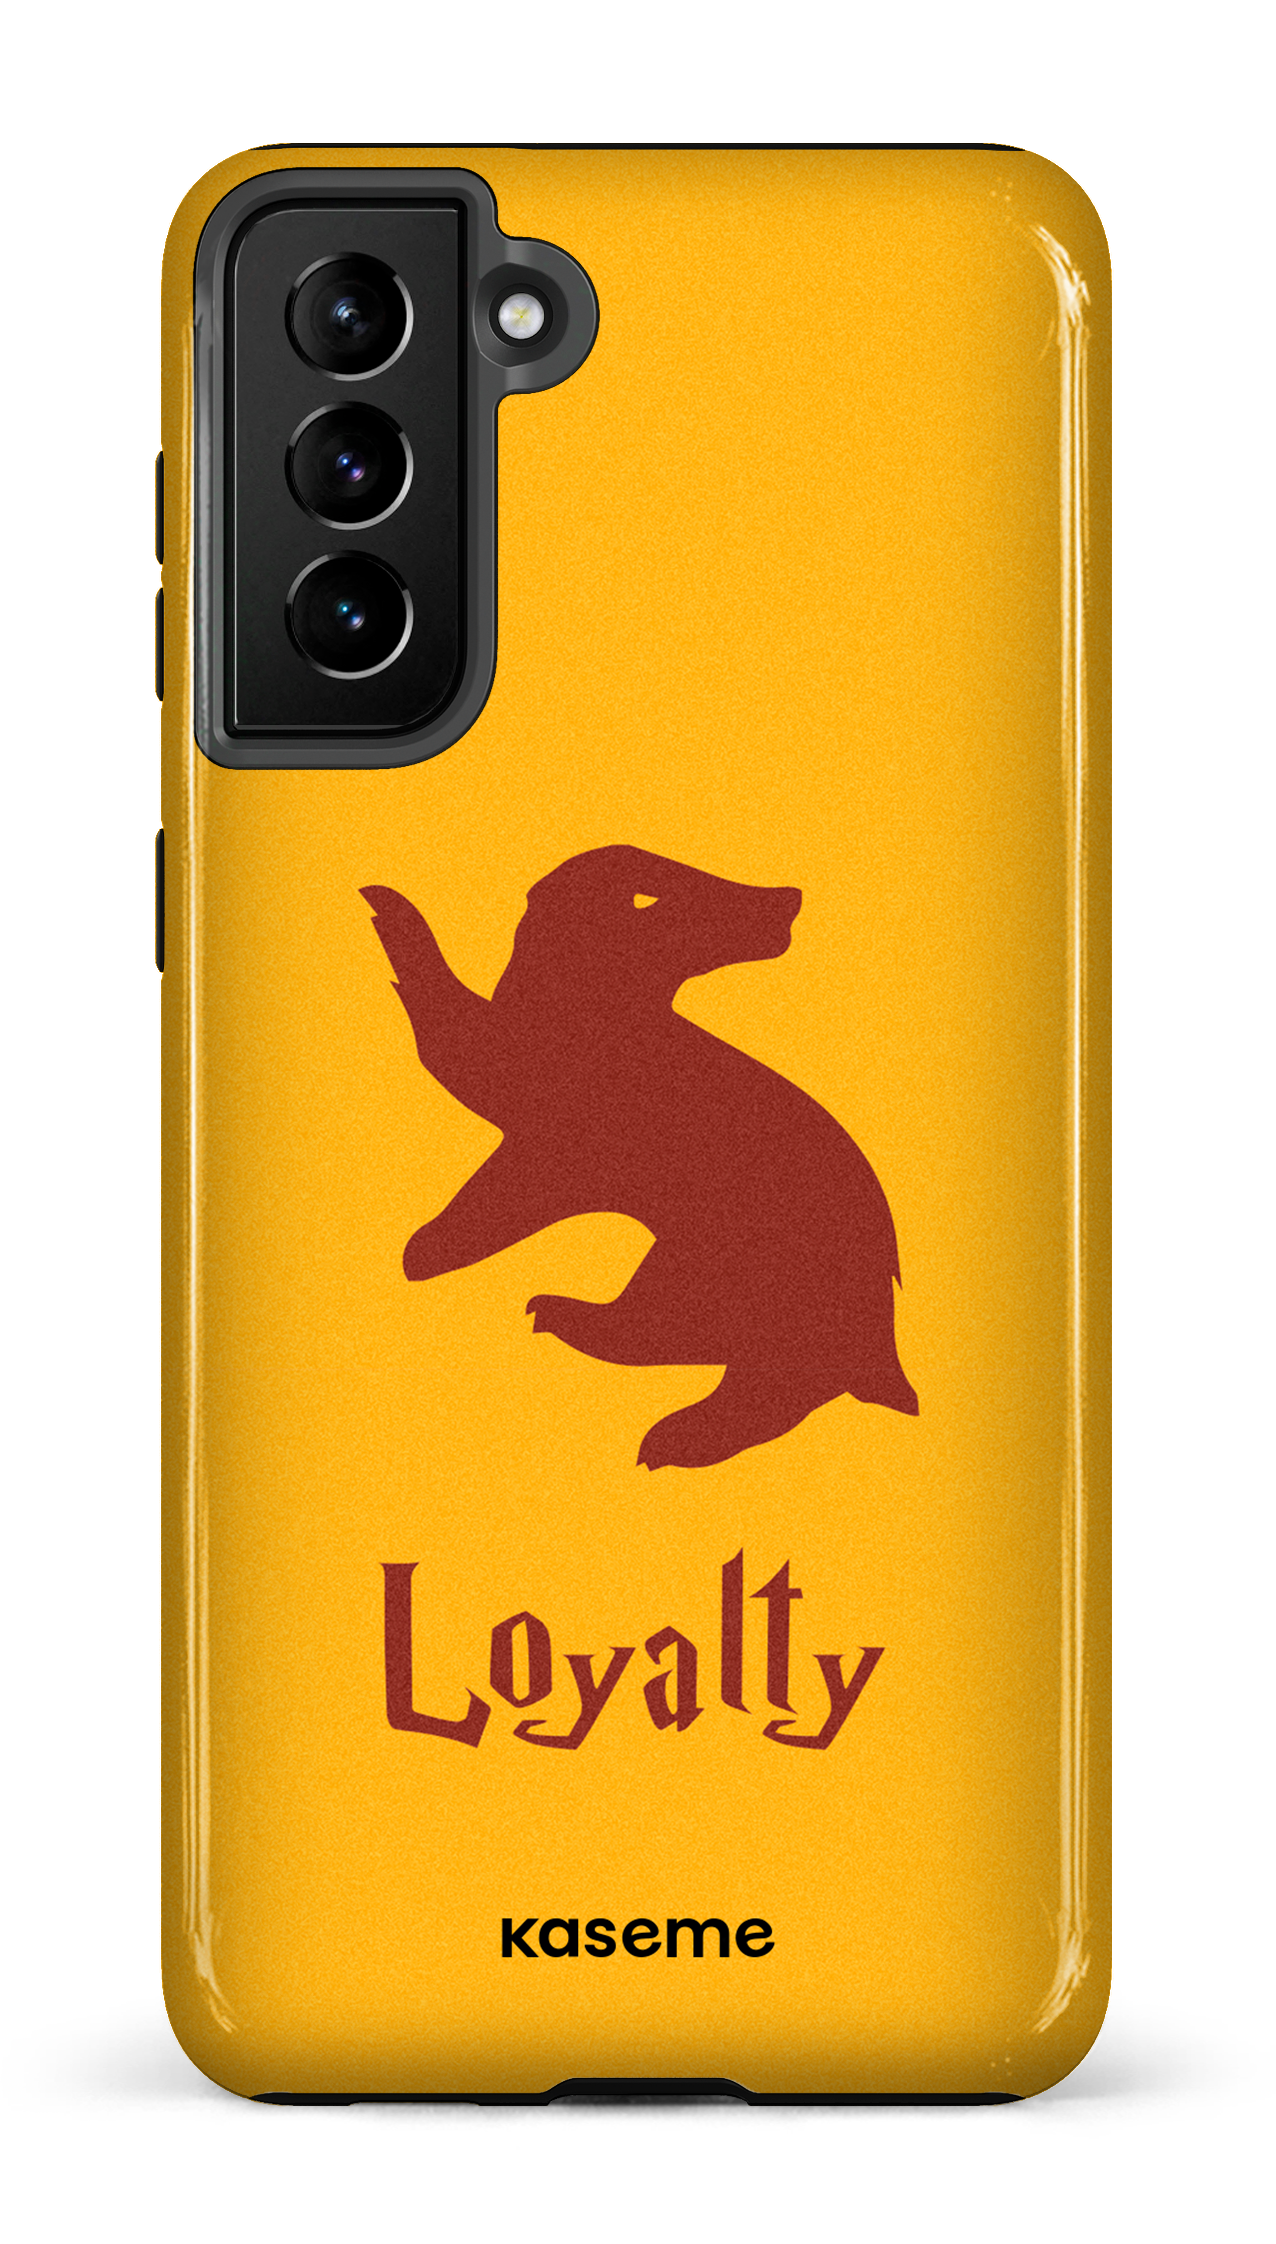 Loyalty - Galaxy S21 Plus